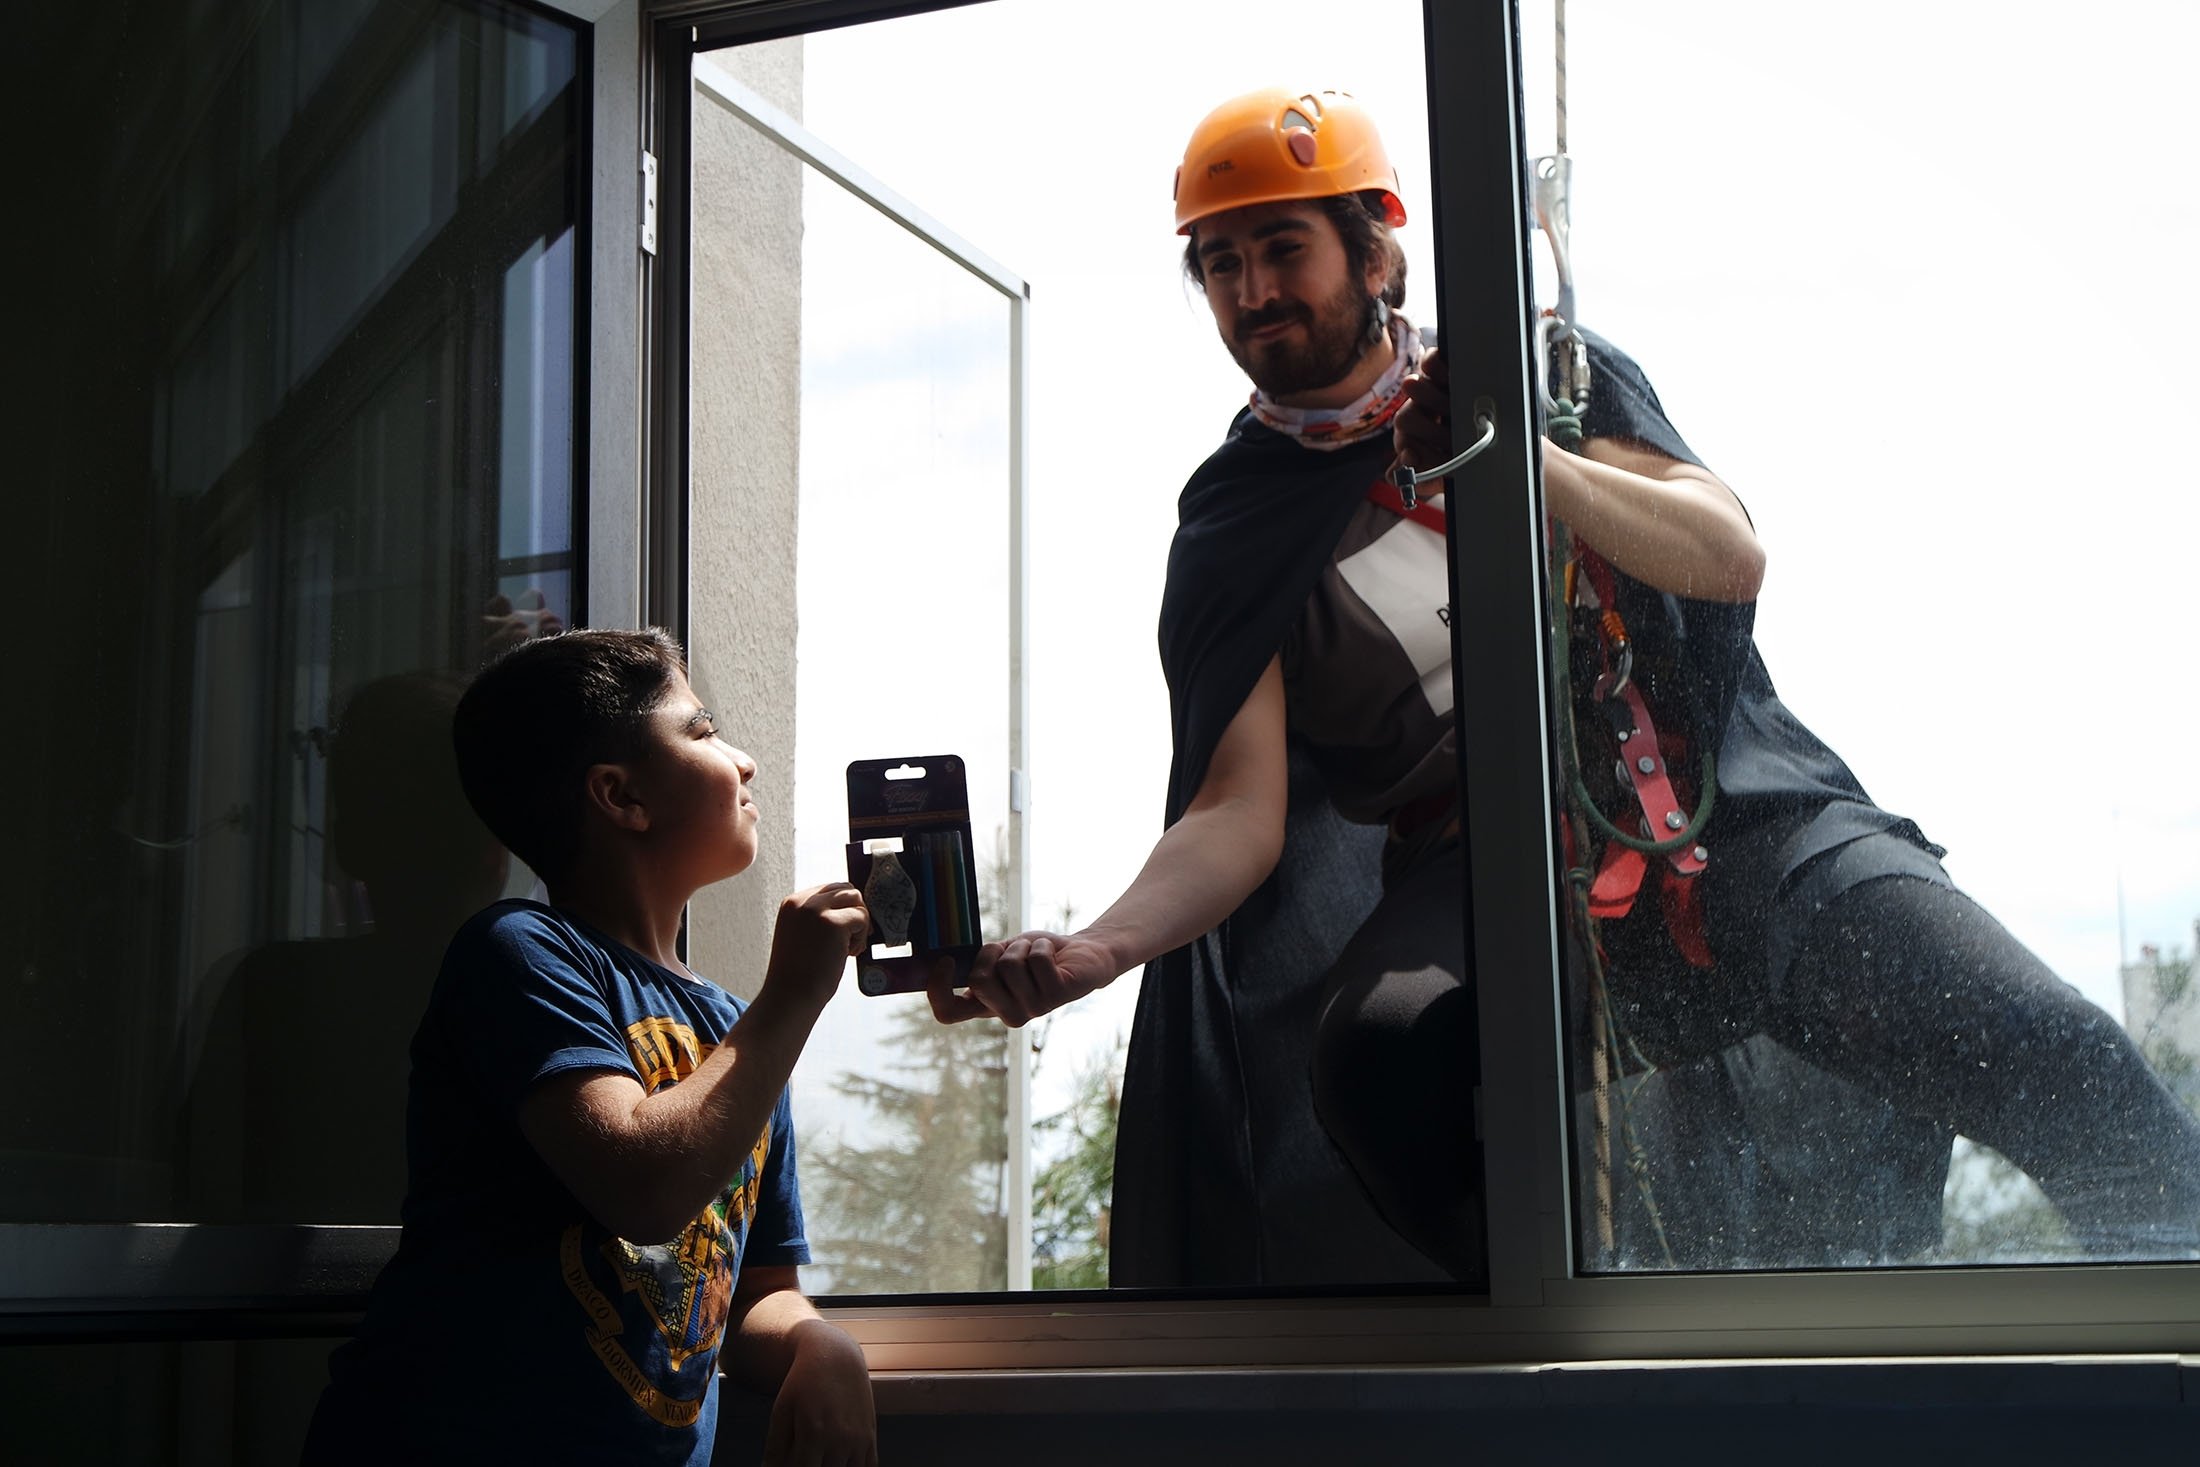 Bursa's superheroes rappel down to children's windows bearing gifts